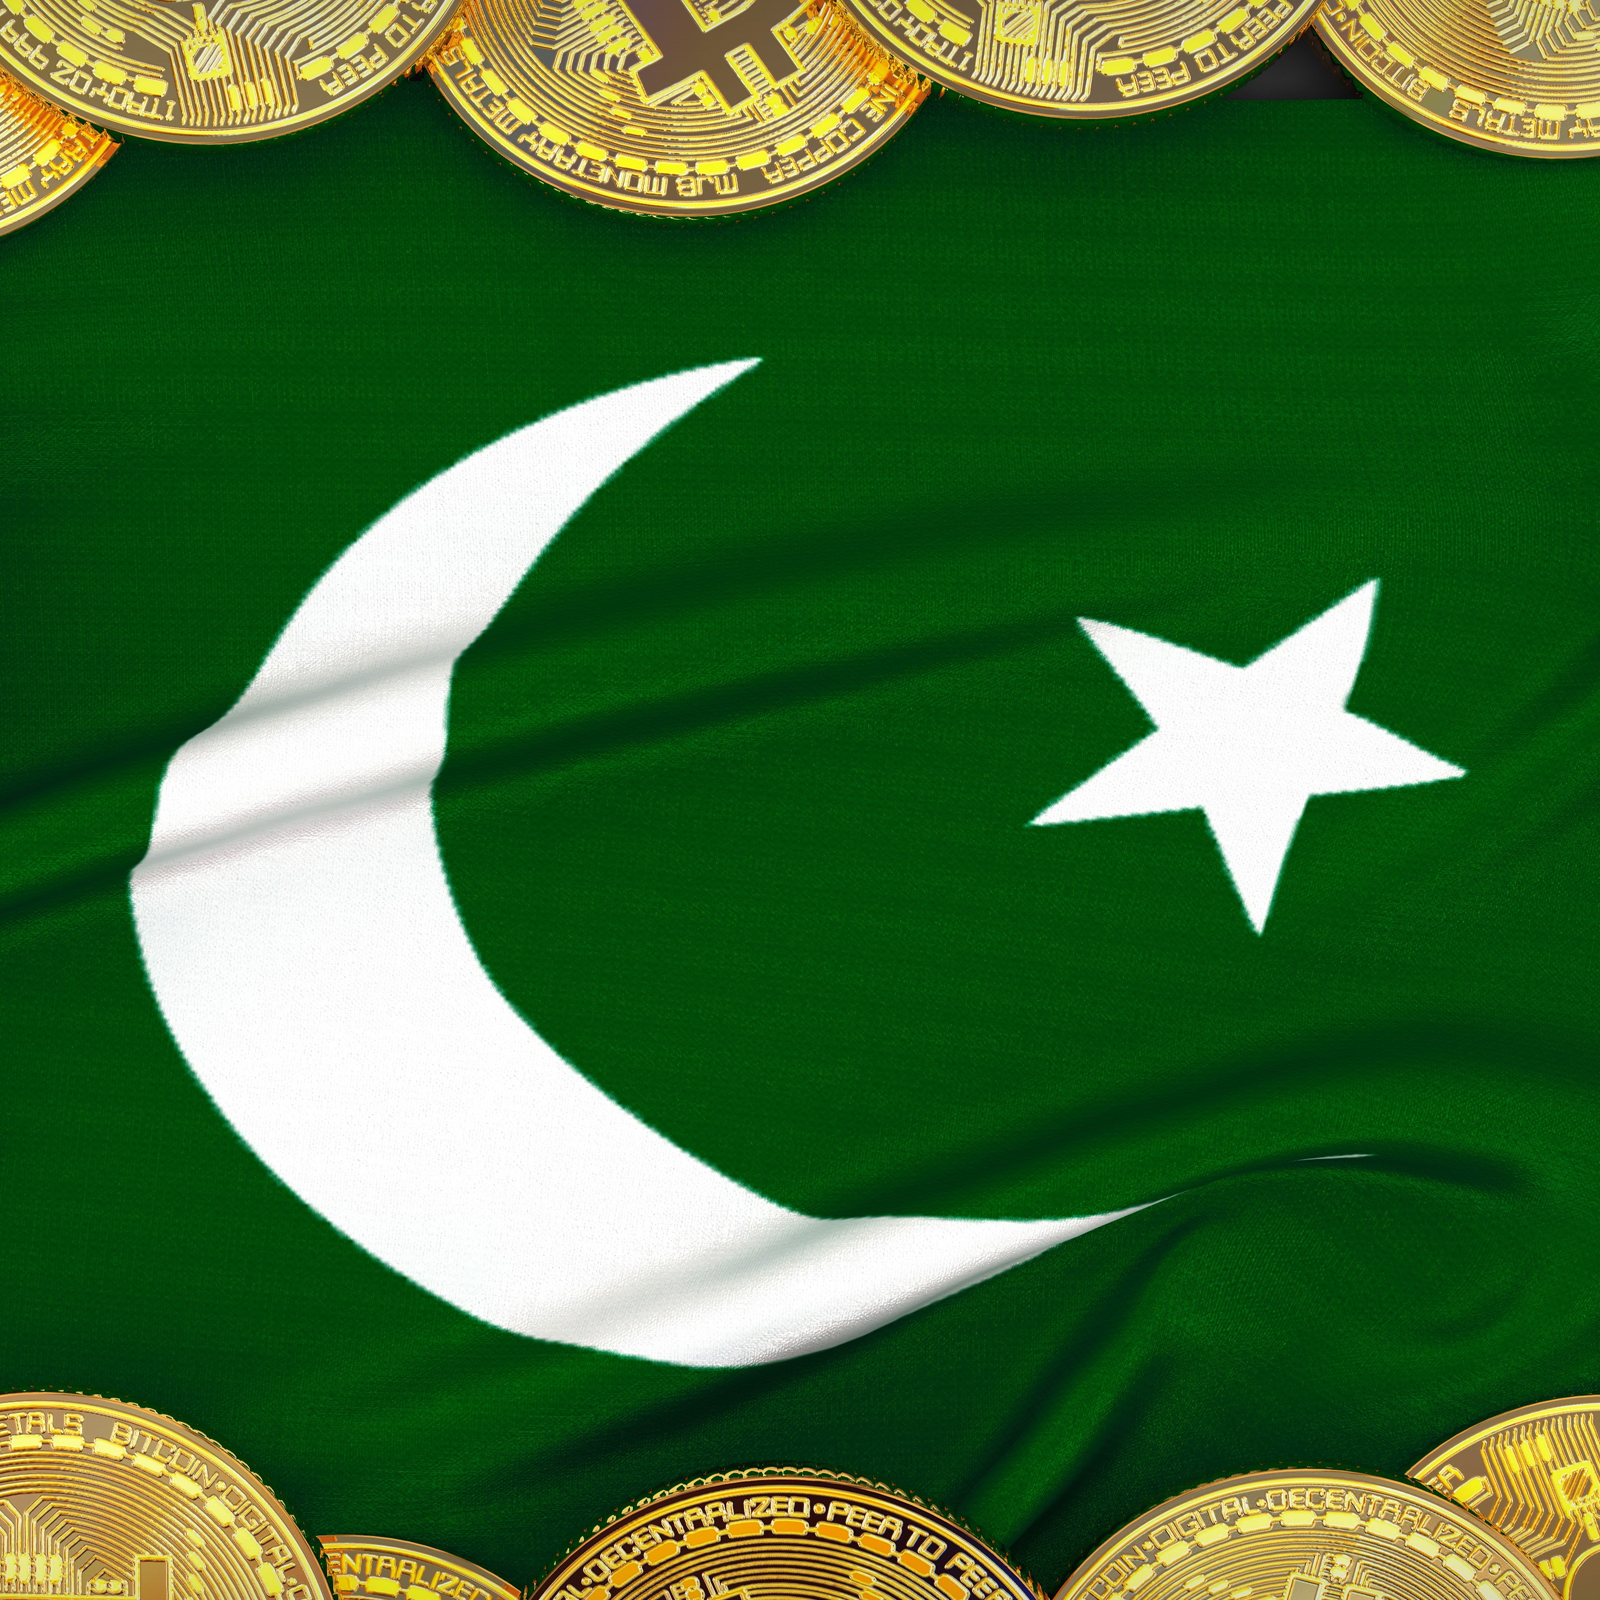 Pakistanis Find Ways to Trade Bitcoin Rendering Ban Ineffective